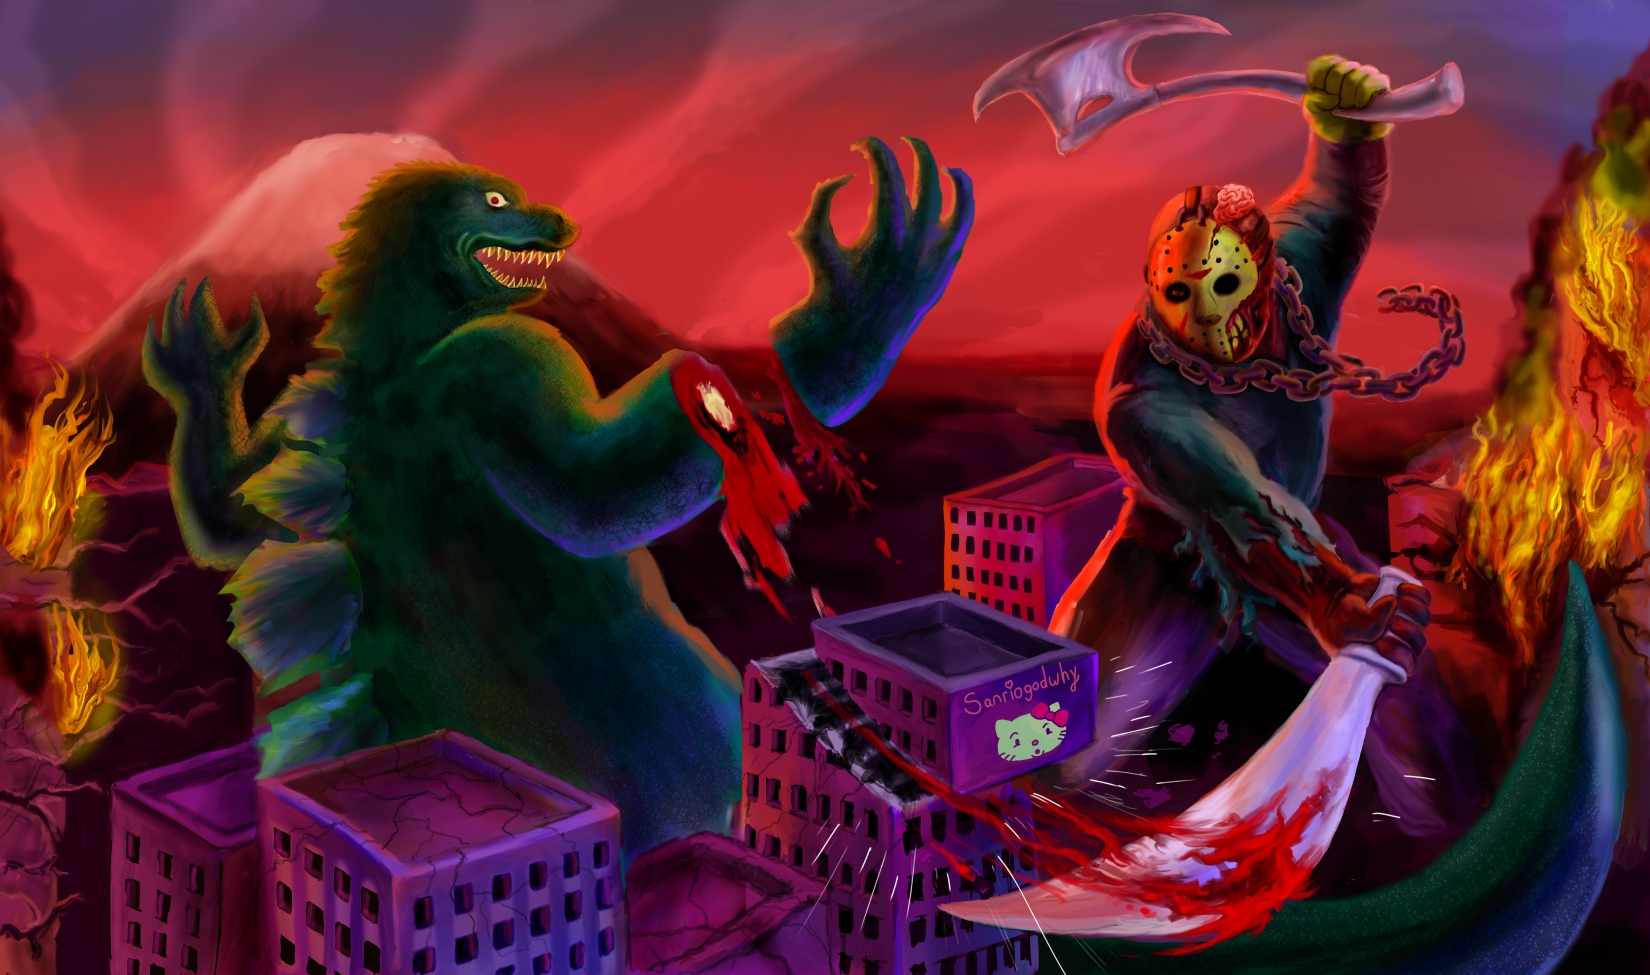 Godzilla_VS_Jason_by_Danomight.jpg